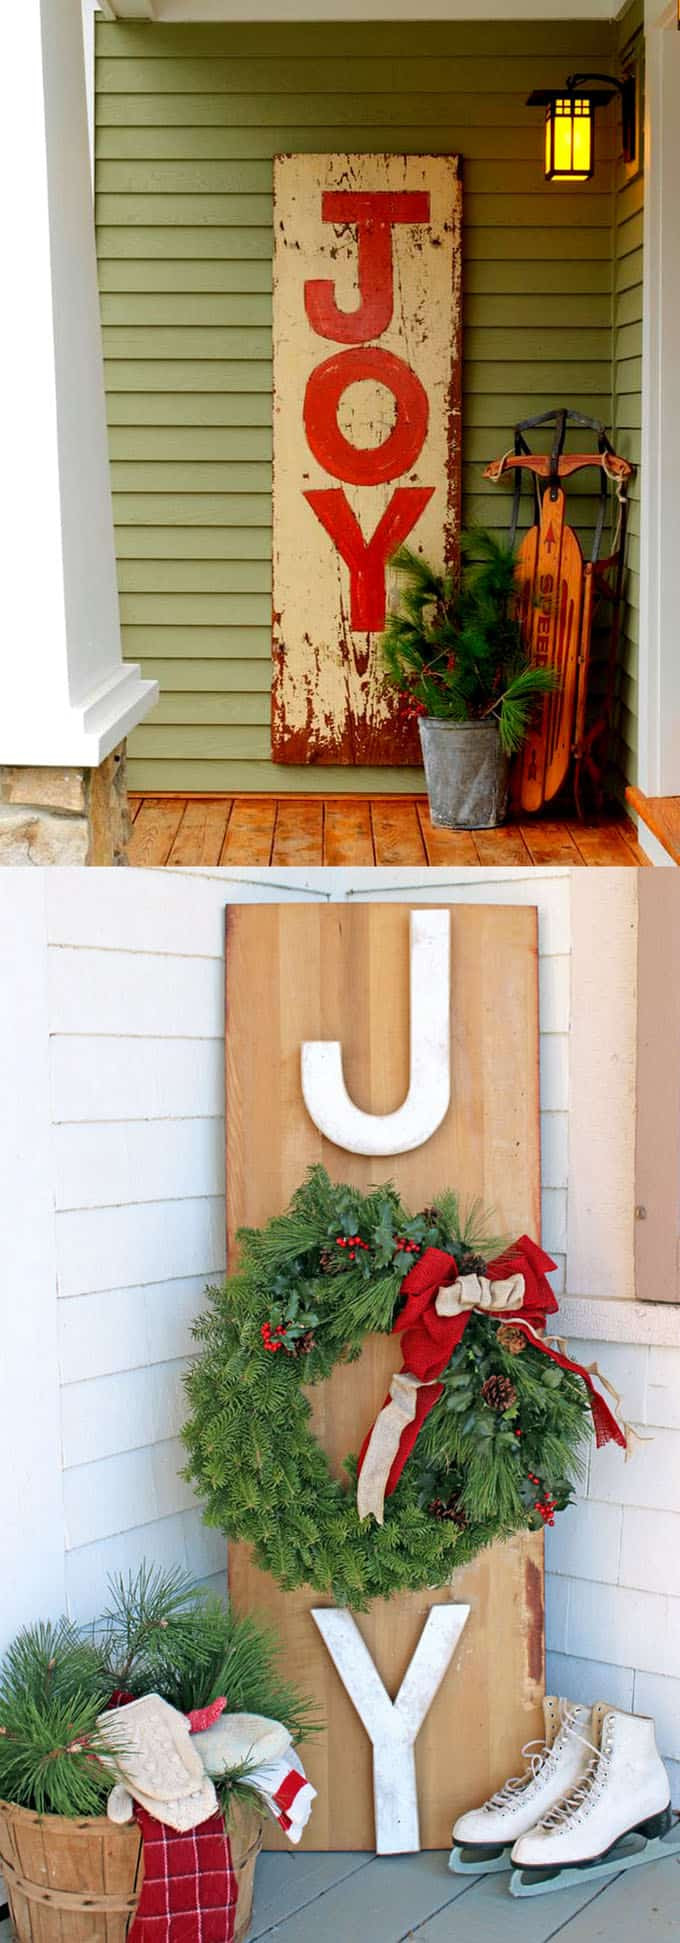 Best ideas about DIY Outdoor Christmas Decorating Ideas
. Save or Pin Gorgeous Outdoor Christmas Decorations 32 Best Ideas Now.